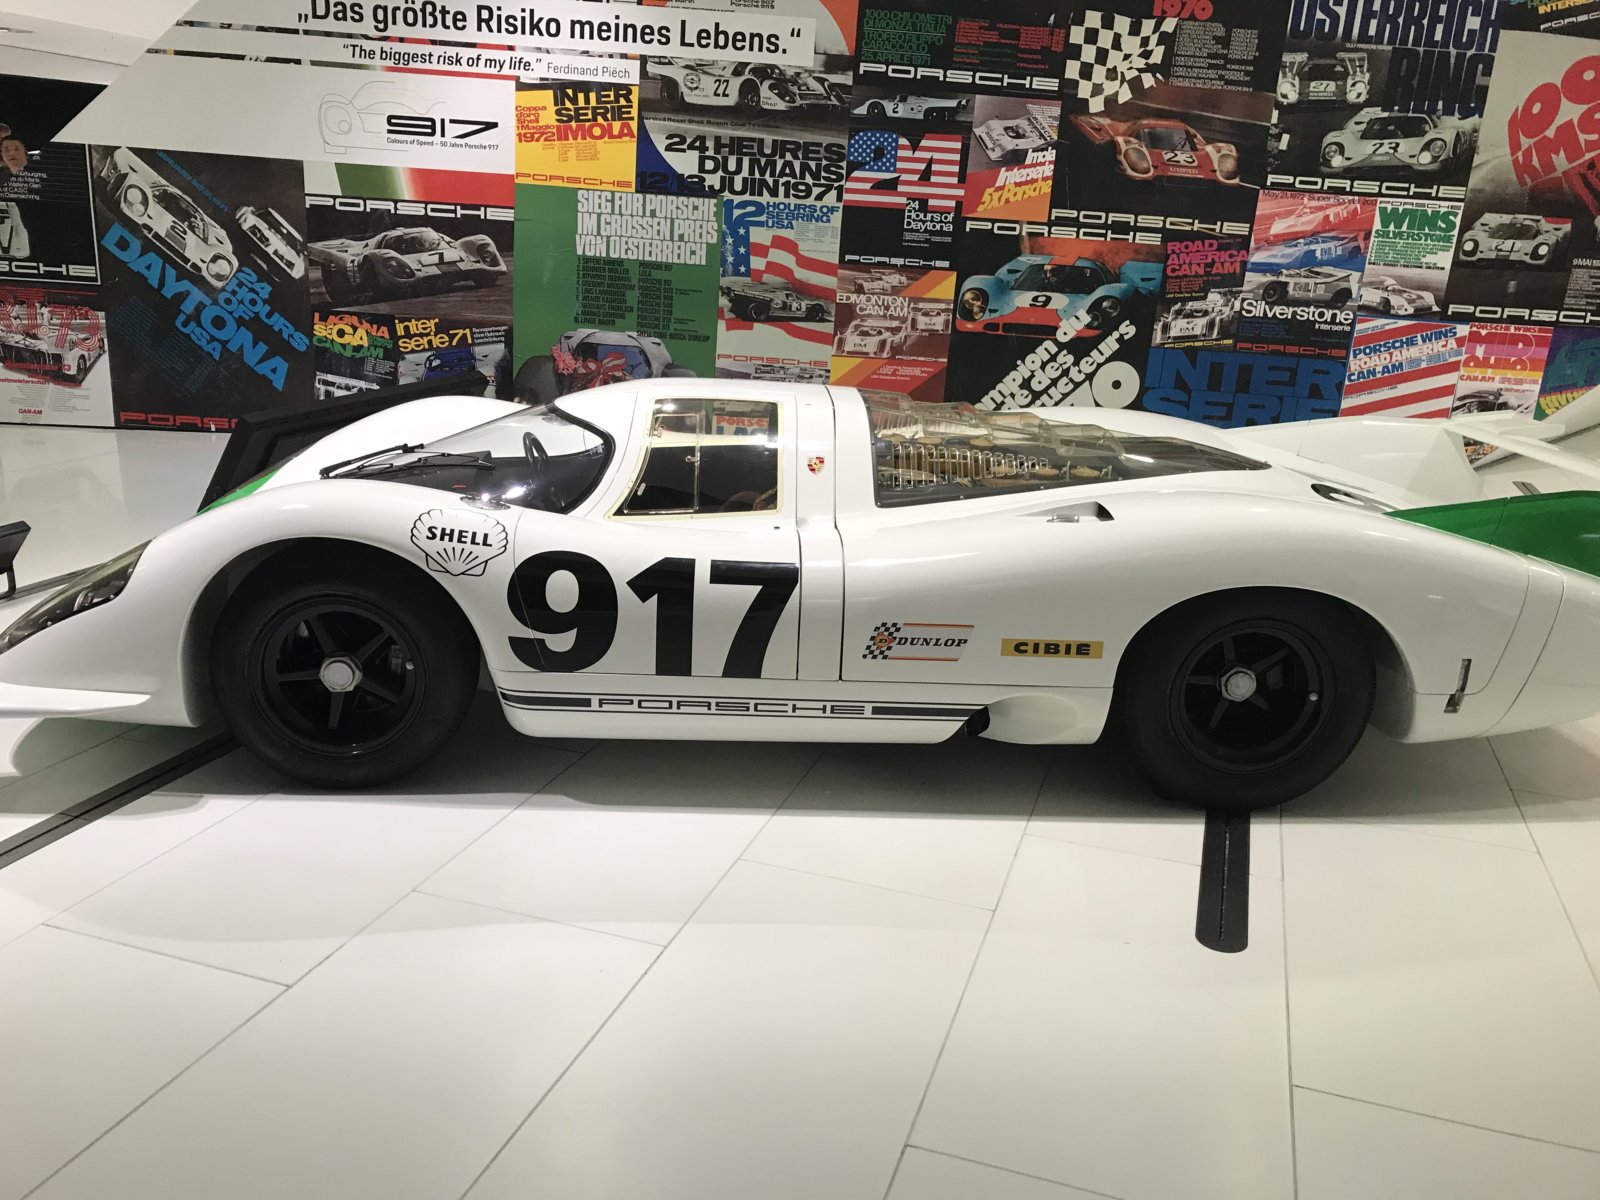 07-28 Porsche Race Car 05